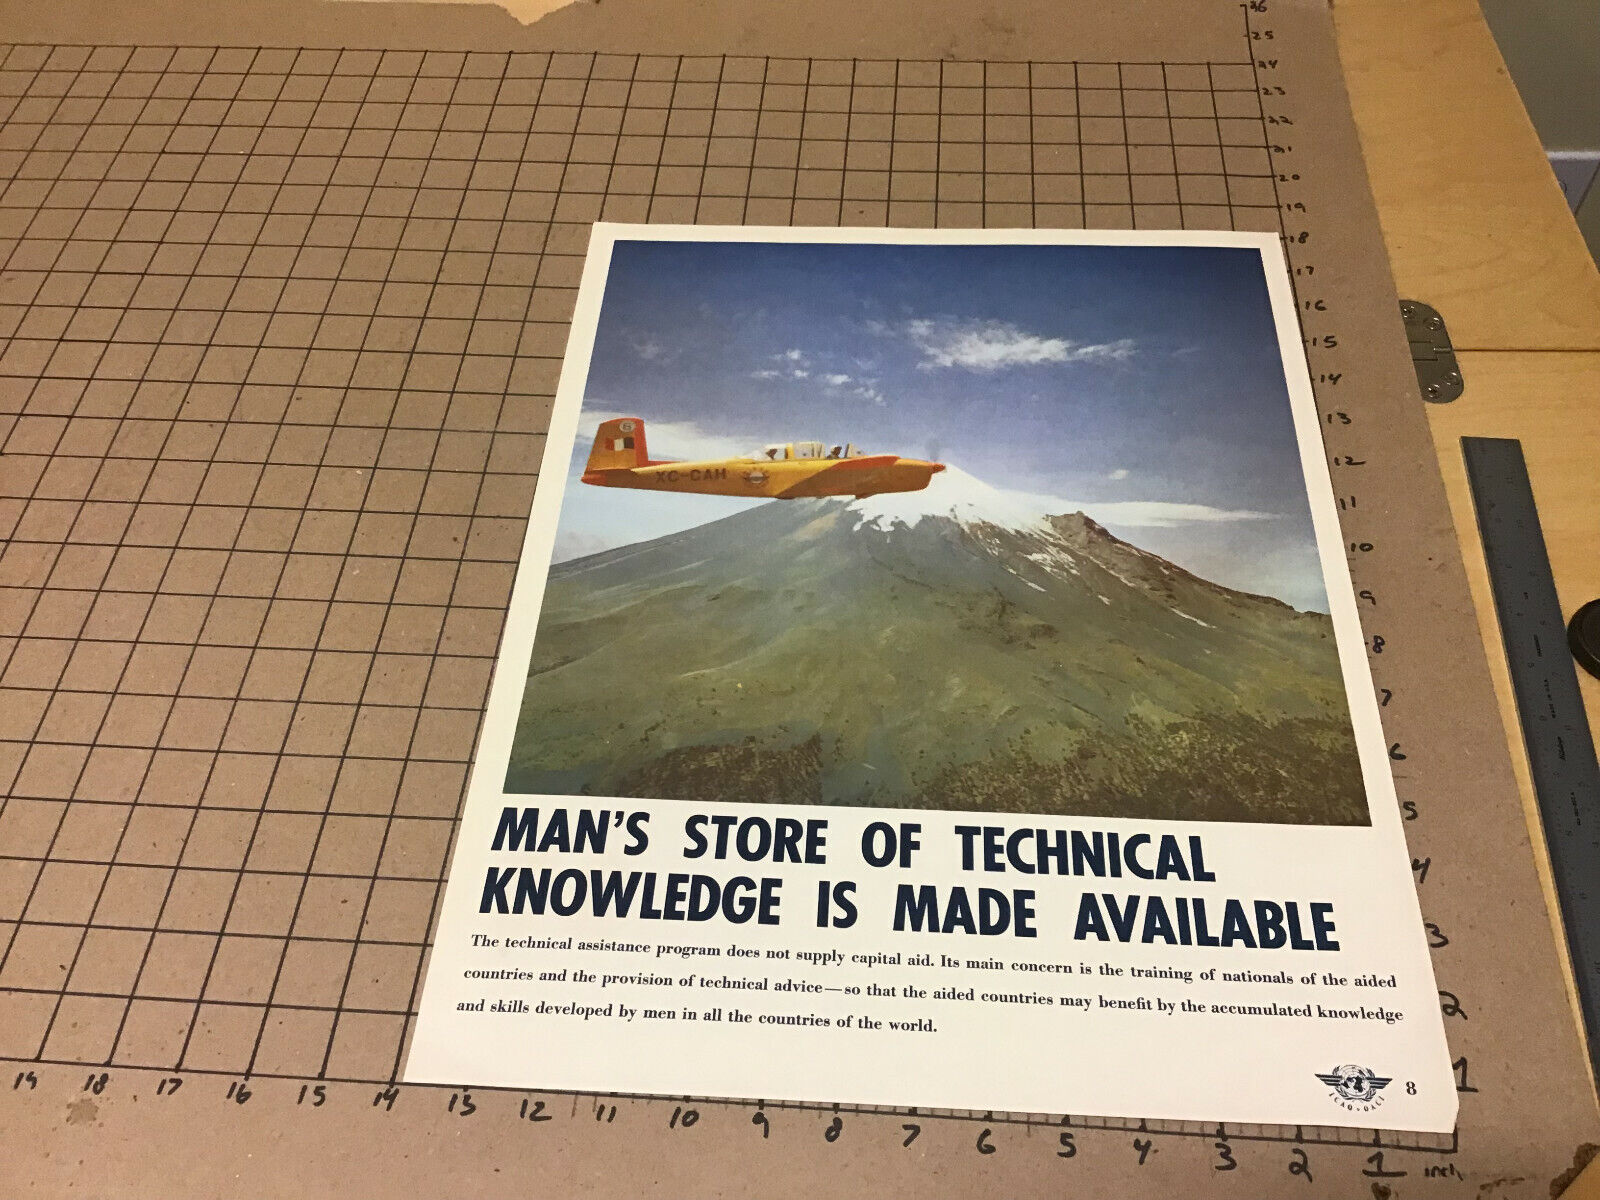 original 1956 international civil aviation organization Poster: TECHINICAL KNOW